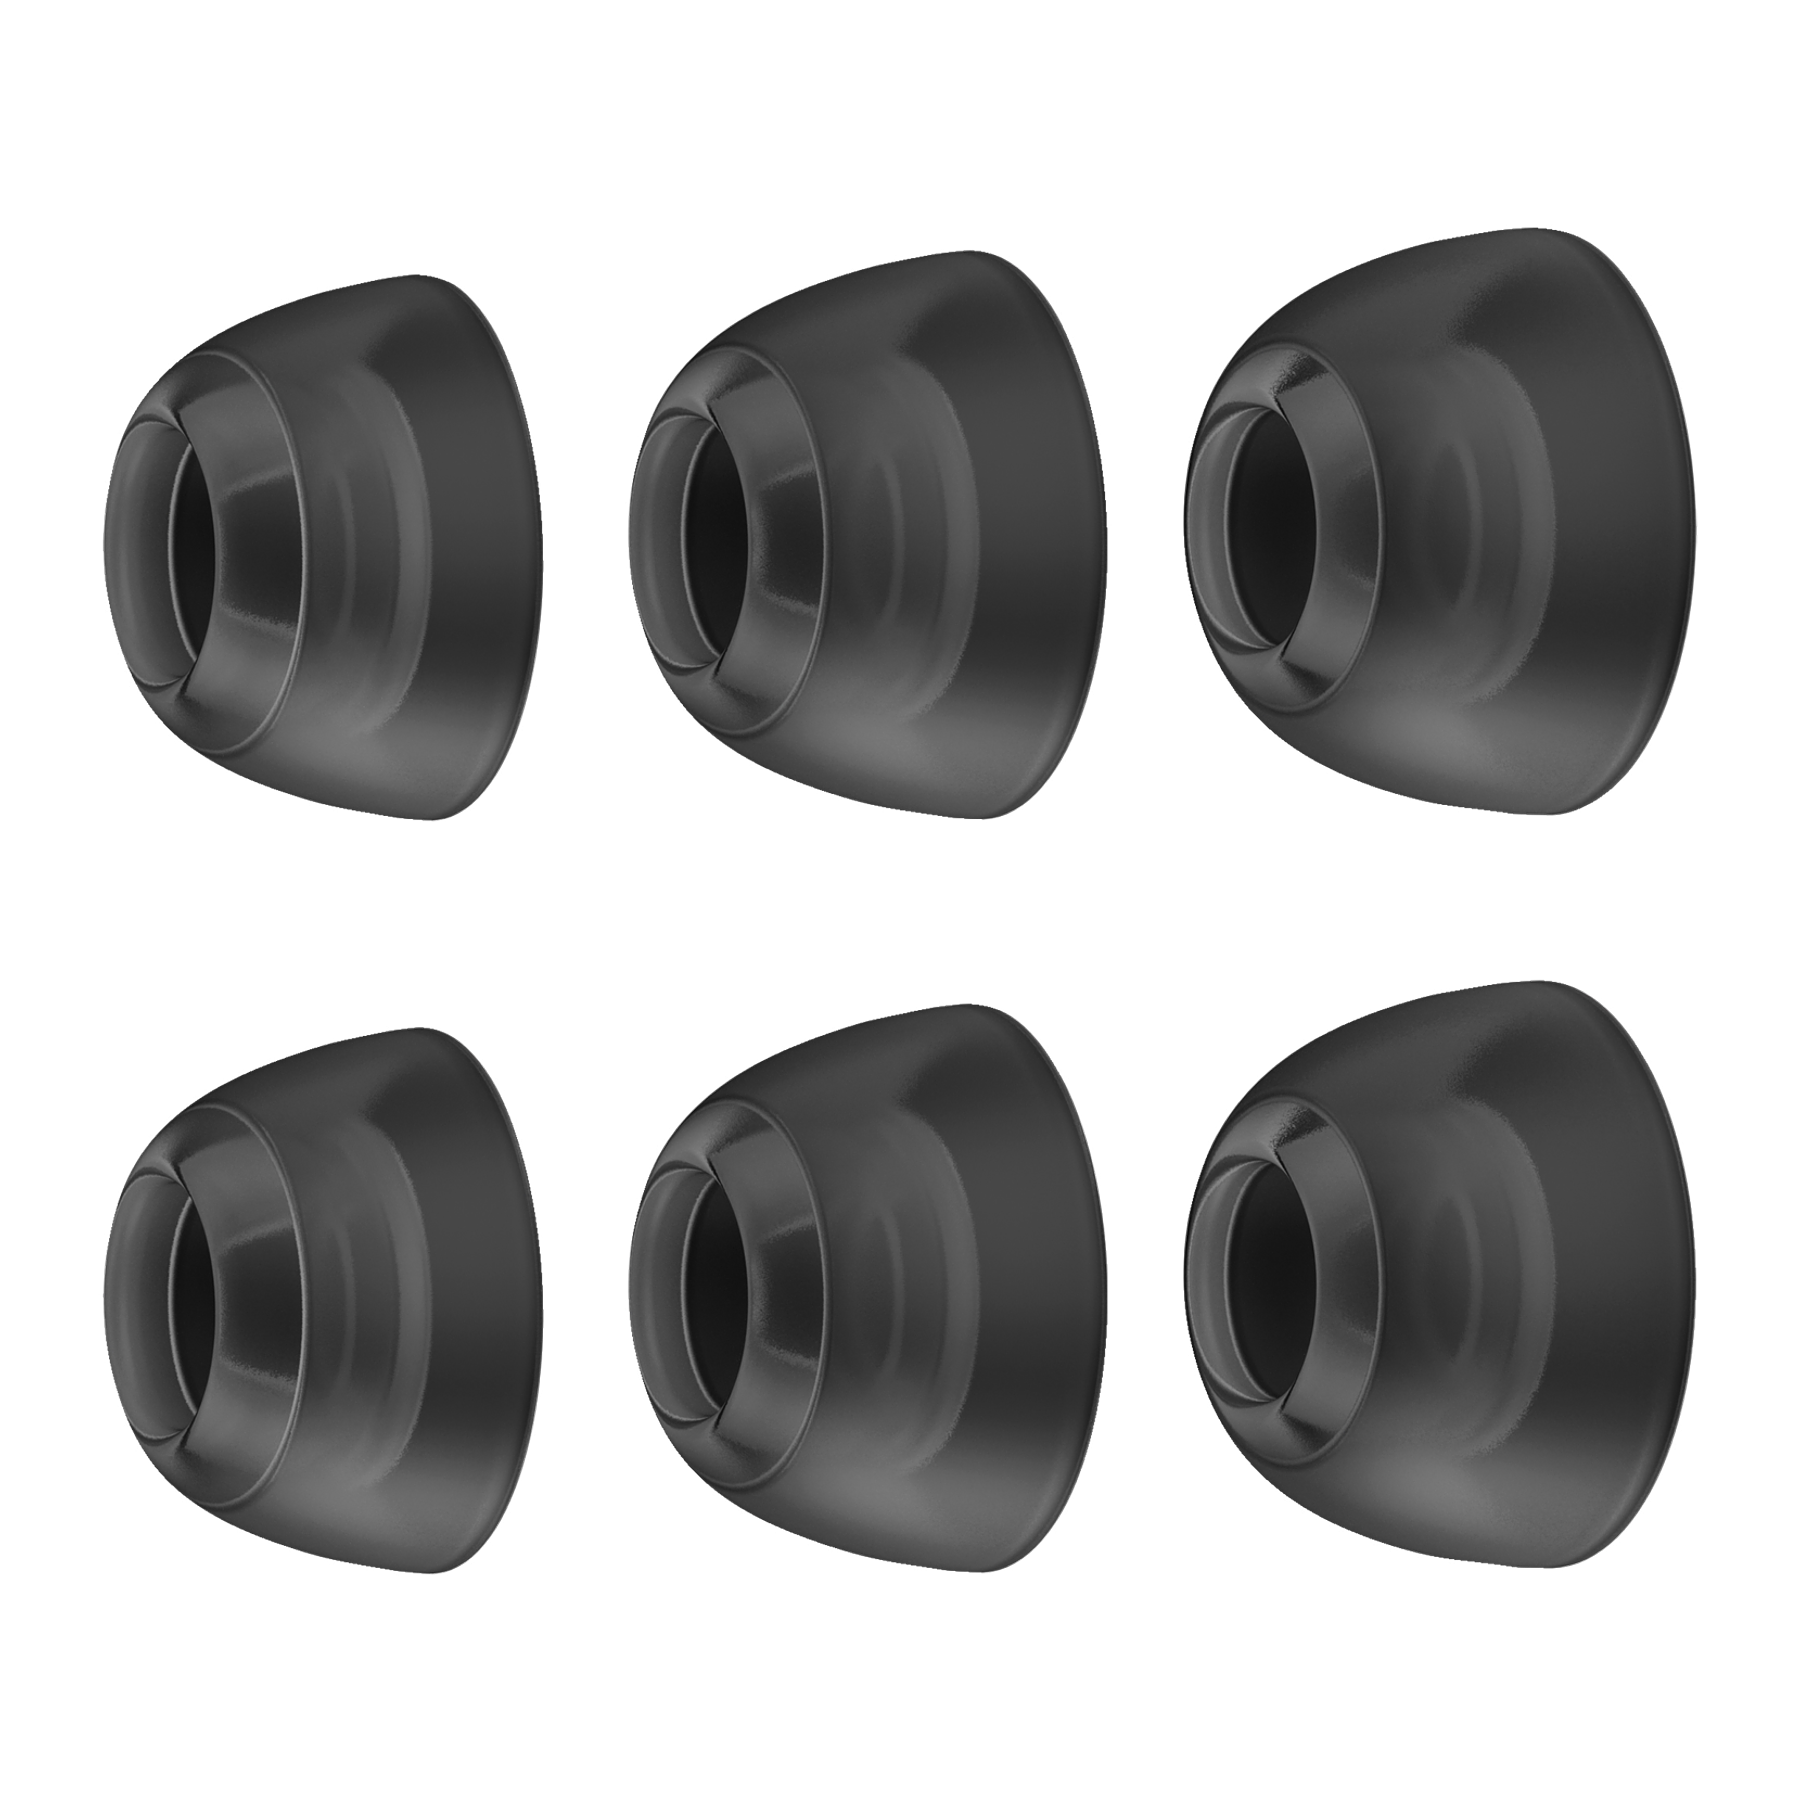 HyperX Cirro Buds Pro Audífonos Inalámbricos Color Negro